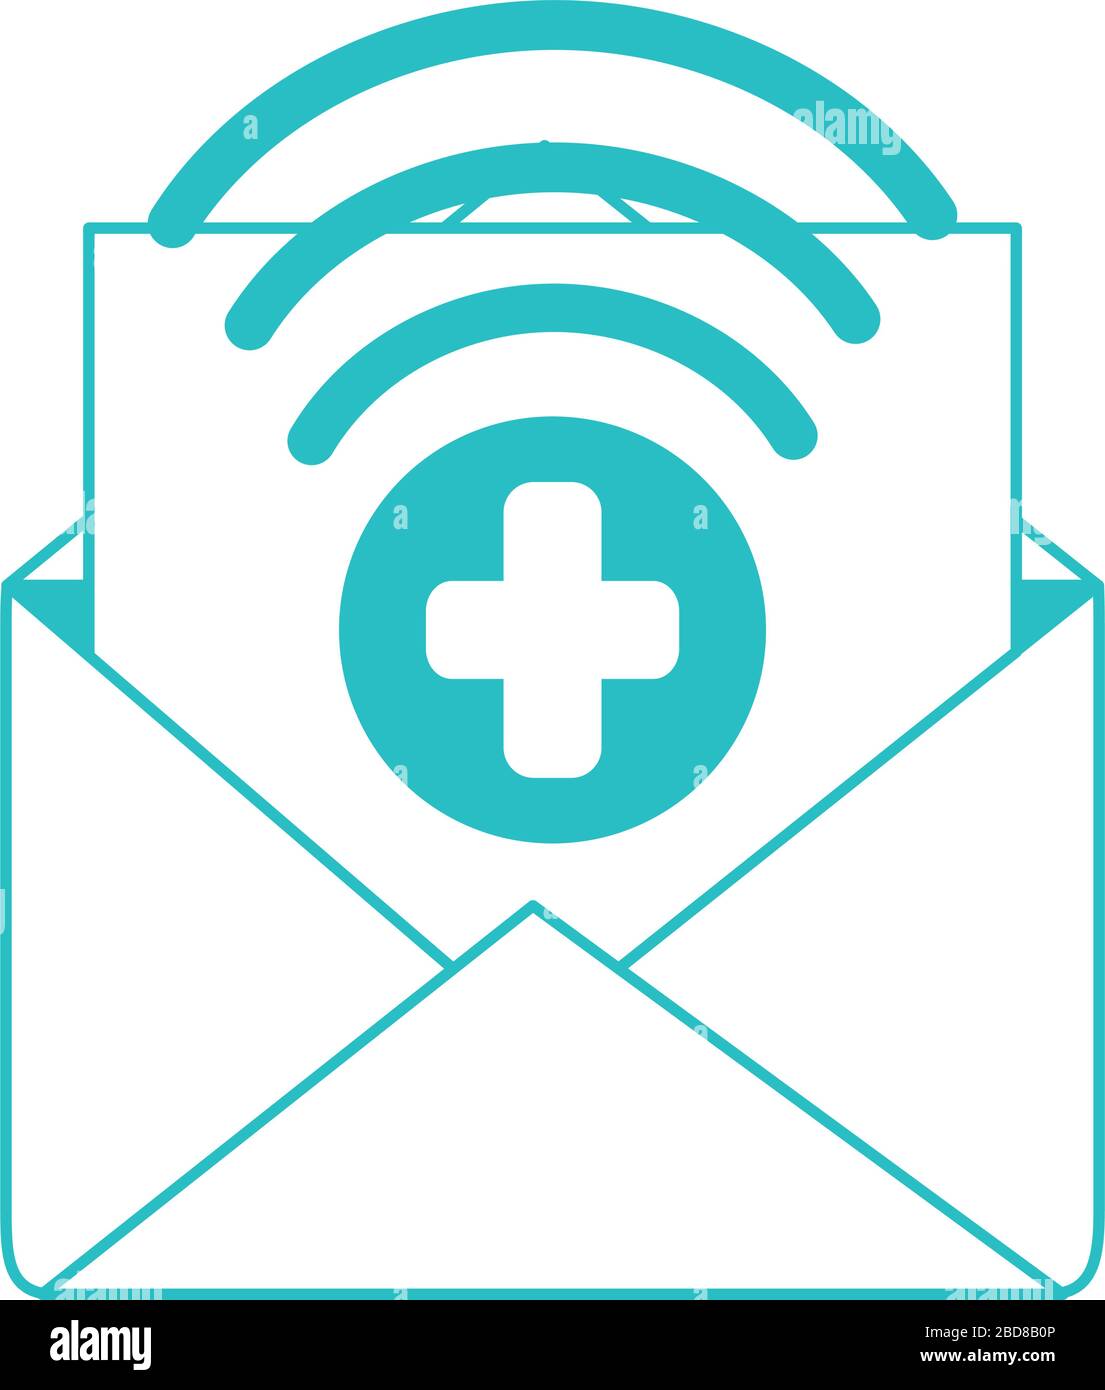 Online-Arzt, E-Mail medizinische Hilfe Berater-Schutz kovid 19 Vektor-Illustration, Linien-Stil-Symbol Stock Vektor